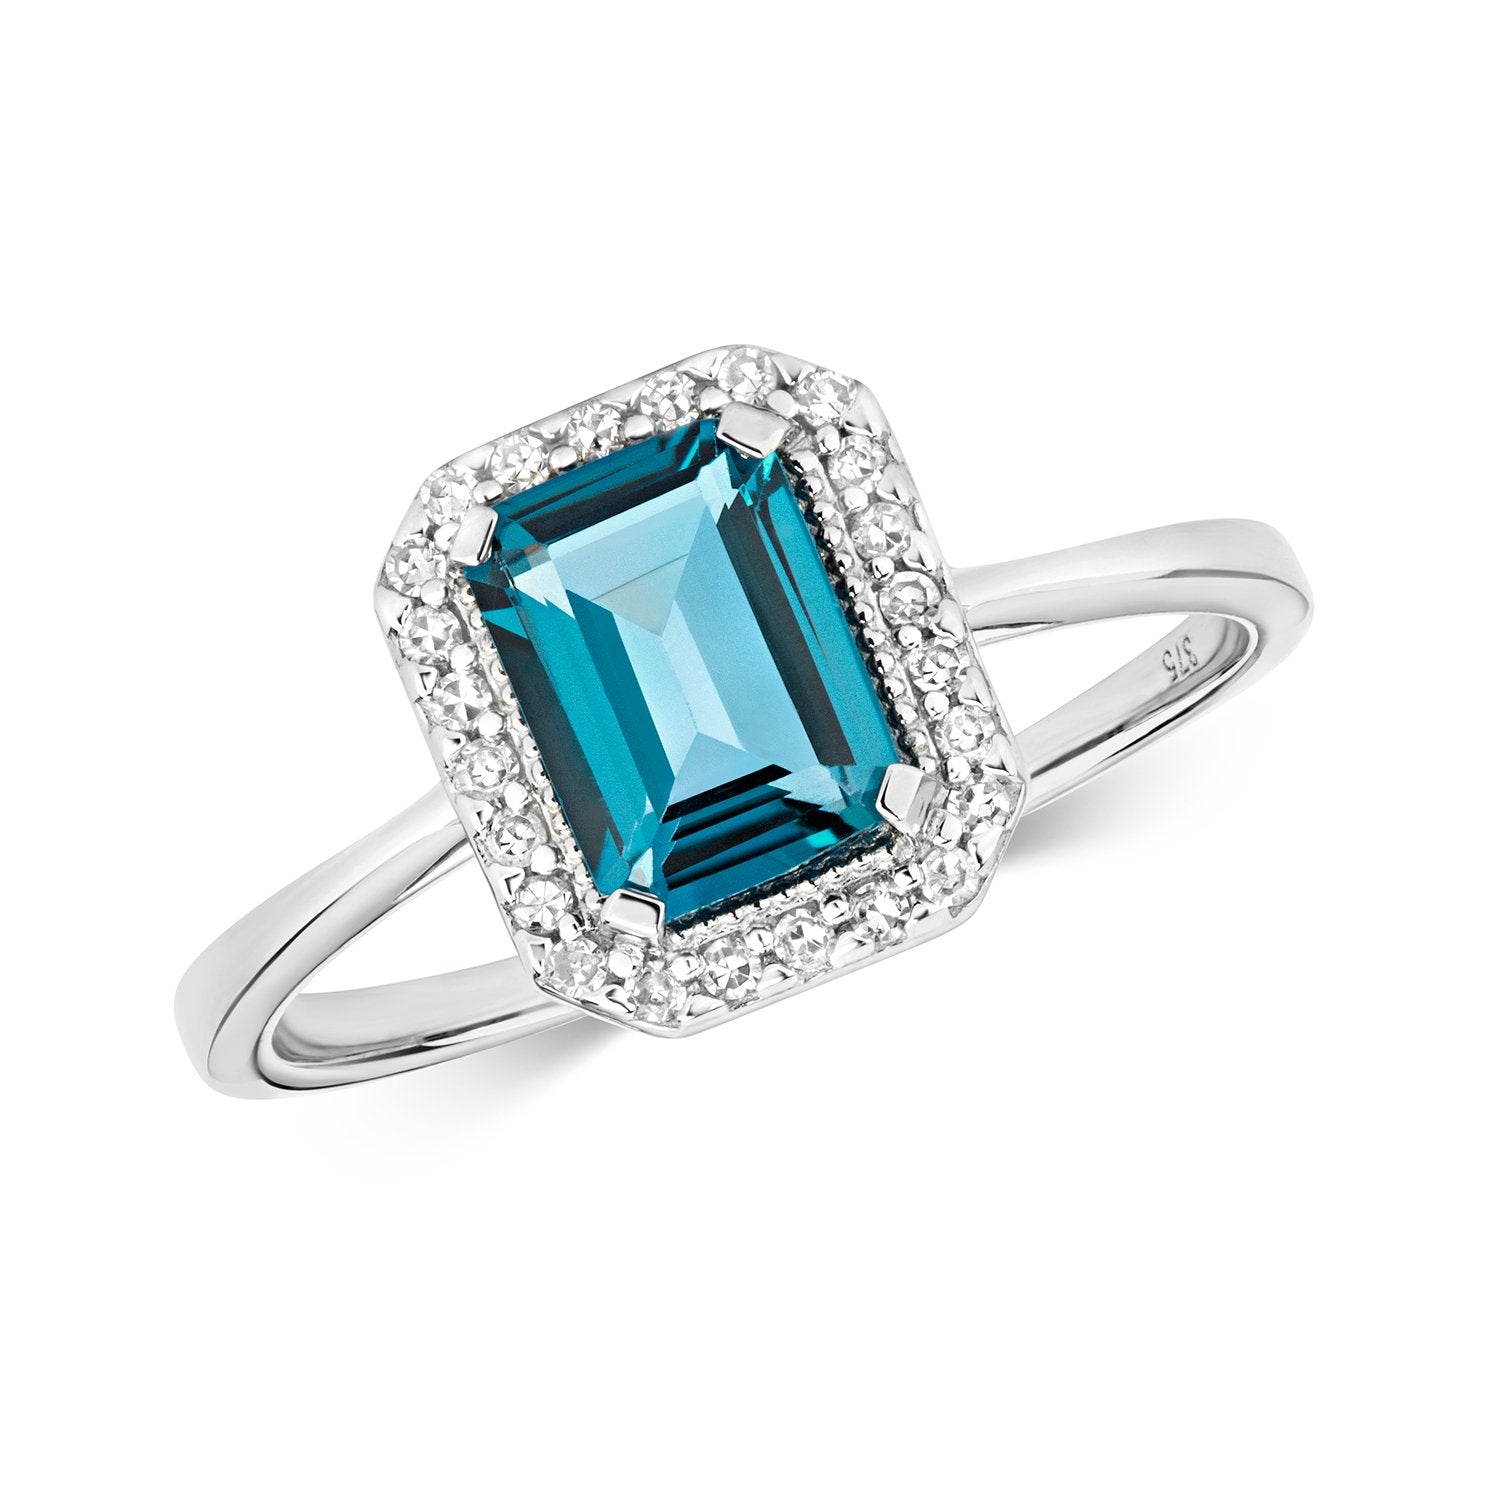 Blue Topaz & Diamond Ring (Rd444wlb)